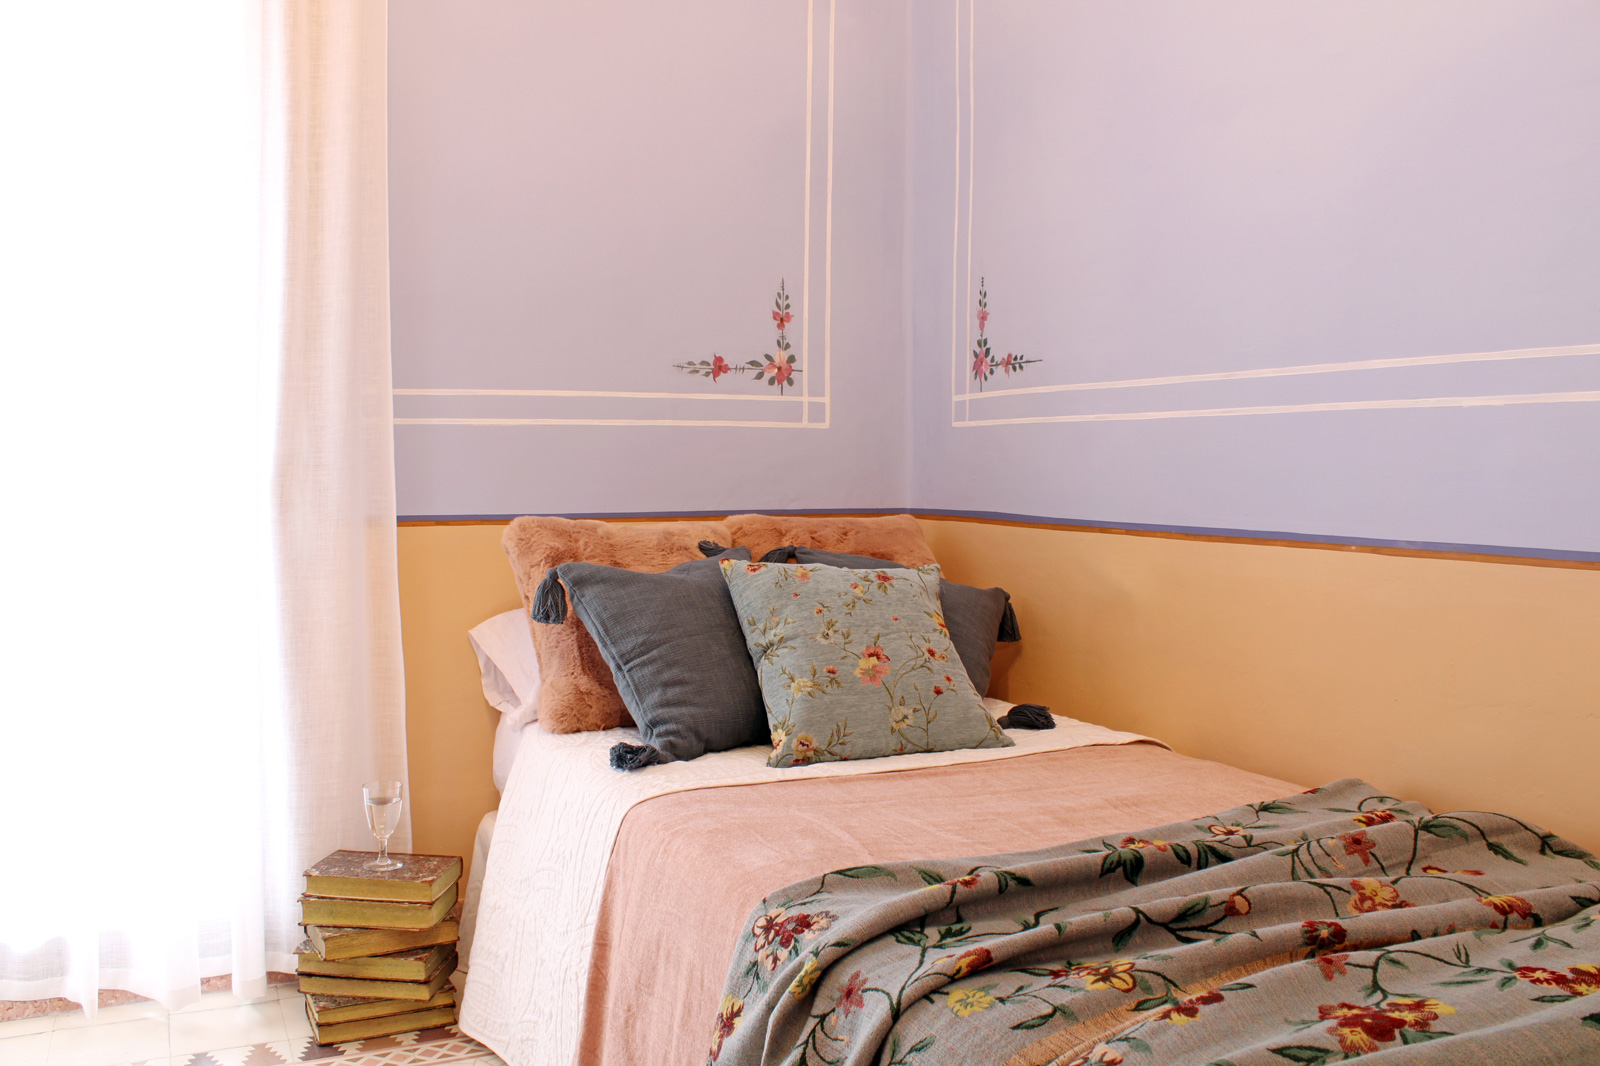 Detalle de dormitorio, esquina con cama con cojines en tonos rosas azules y floridos, montón de libros a modo de mesilla con copa encima